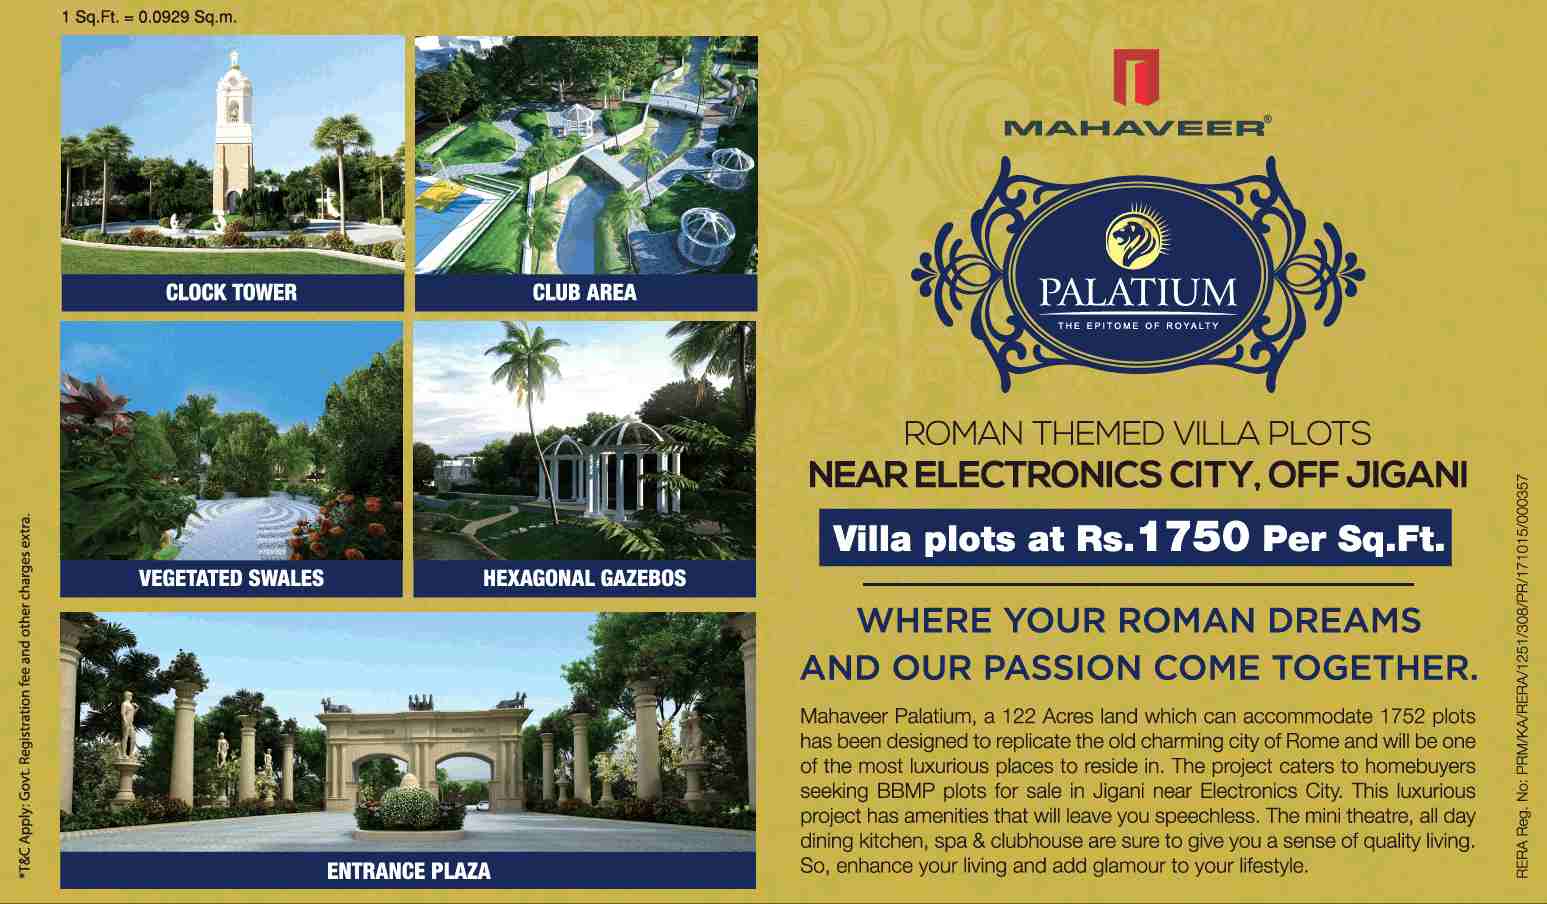 Book Roman Themed villa plots at Rs. 1750 per sqft. at Mahaveer Palatium in Bangalore